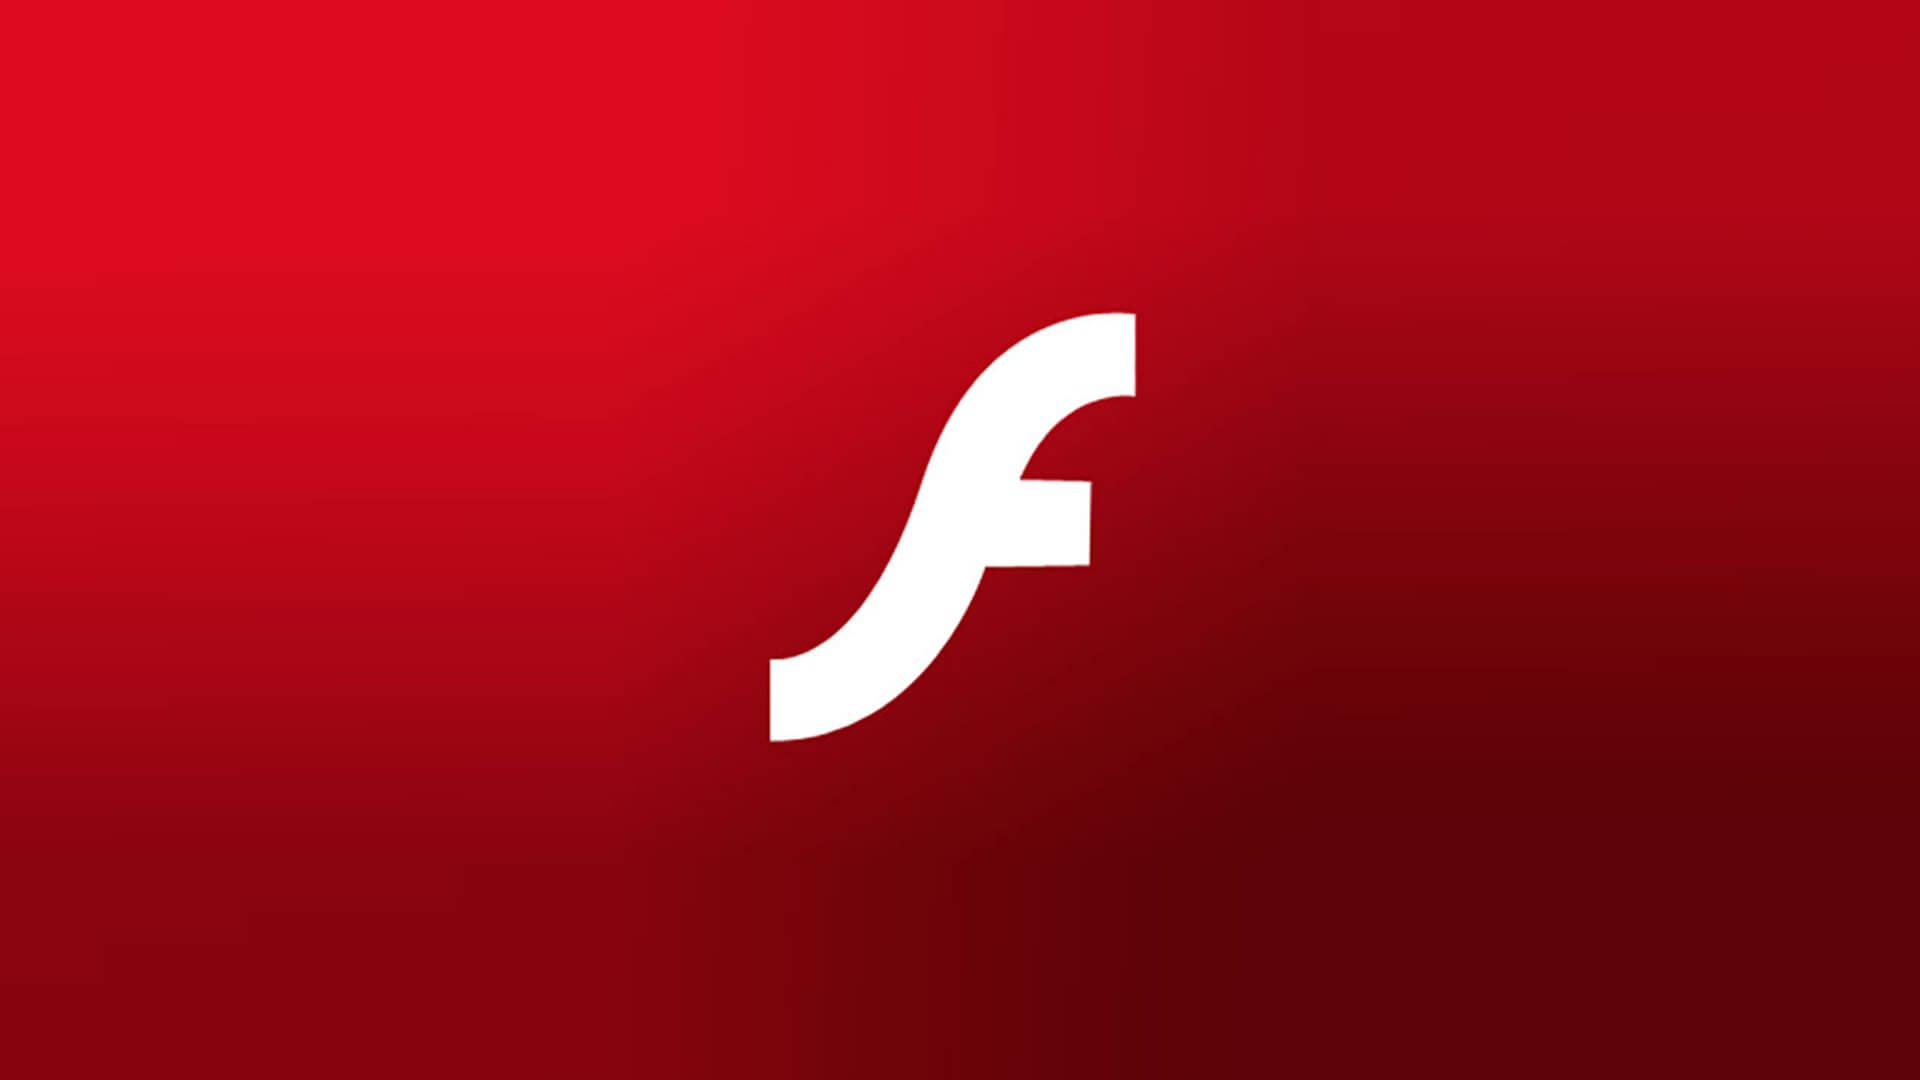 Adobe flash player windows 8